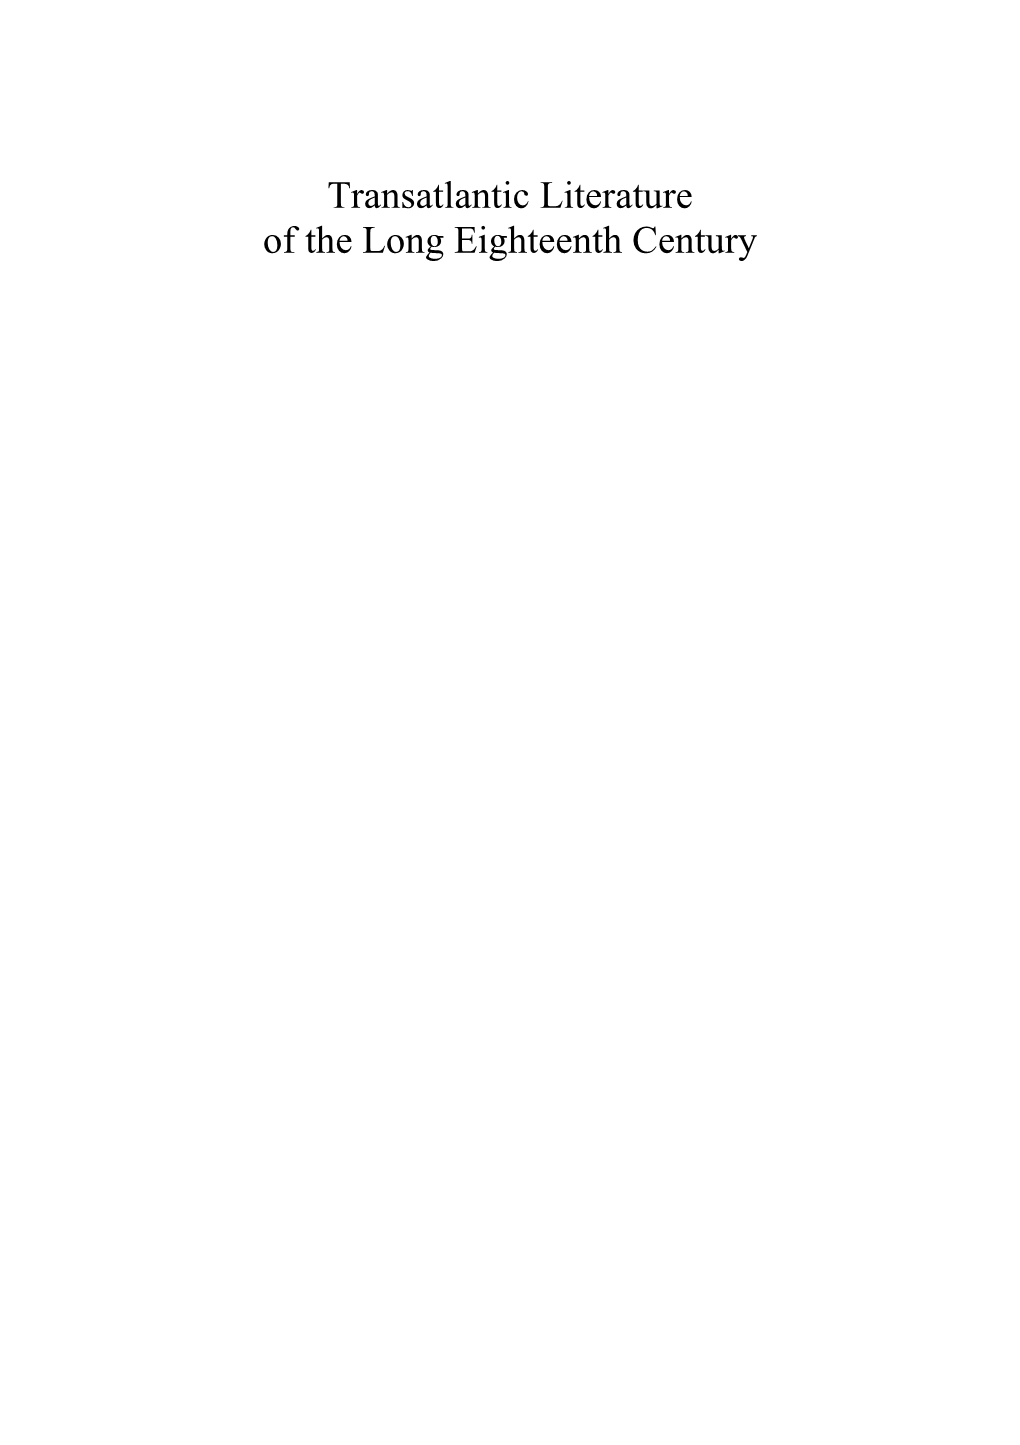 Transatlantic Literature of the Long Eighteenth Century